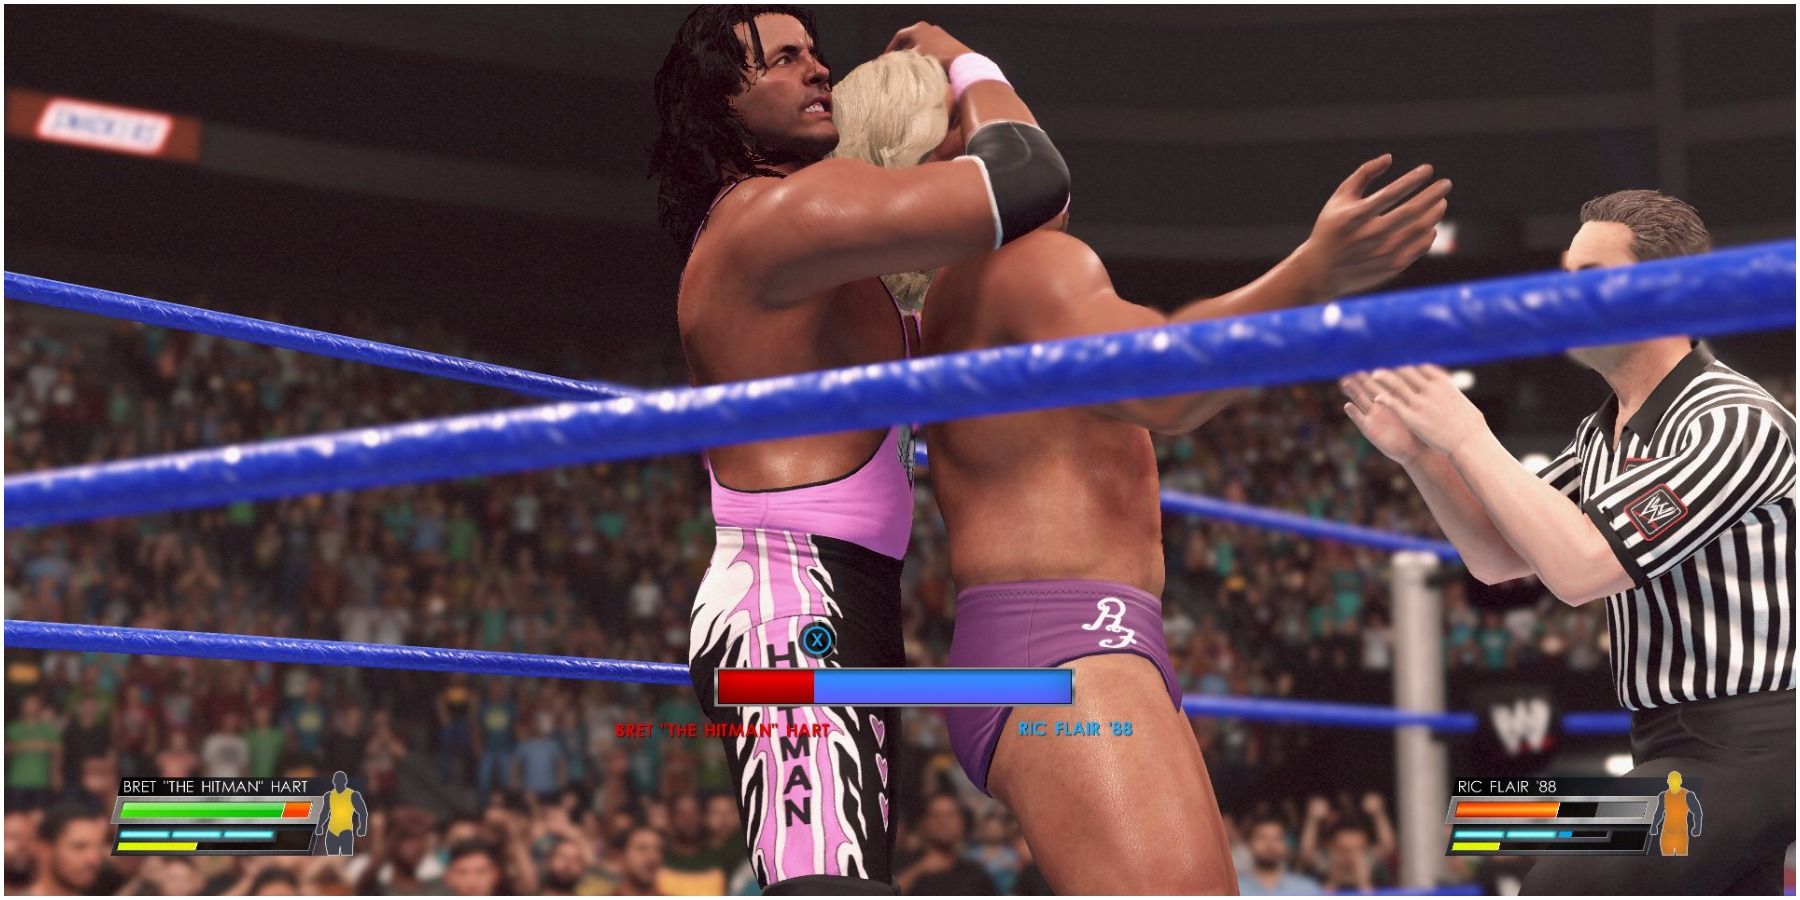 WWE 2k22 Bret Hart hits a sleeper hold on Flair